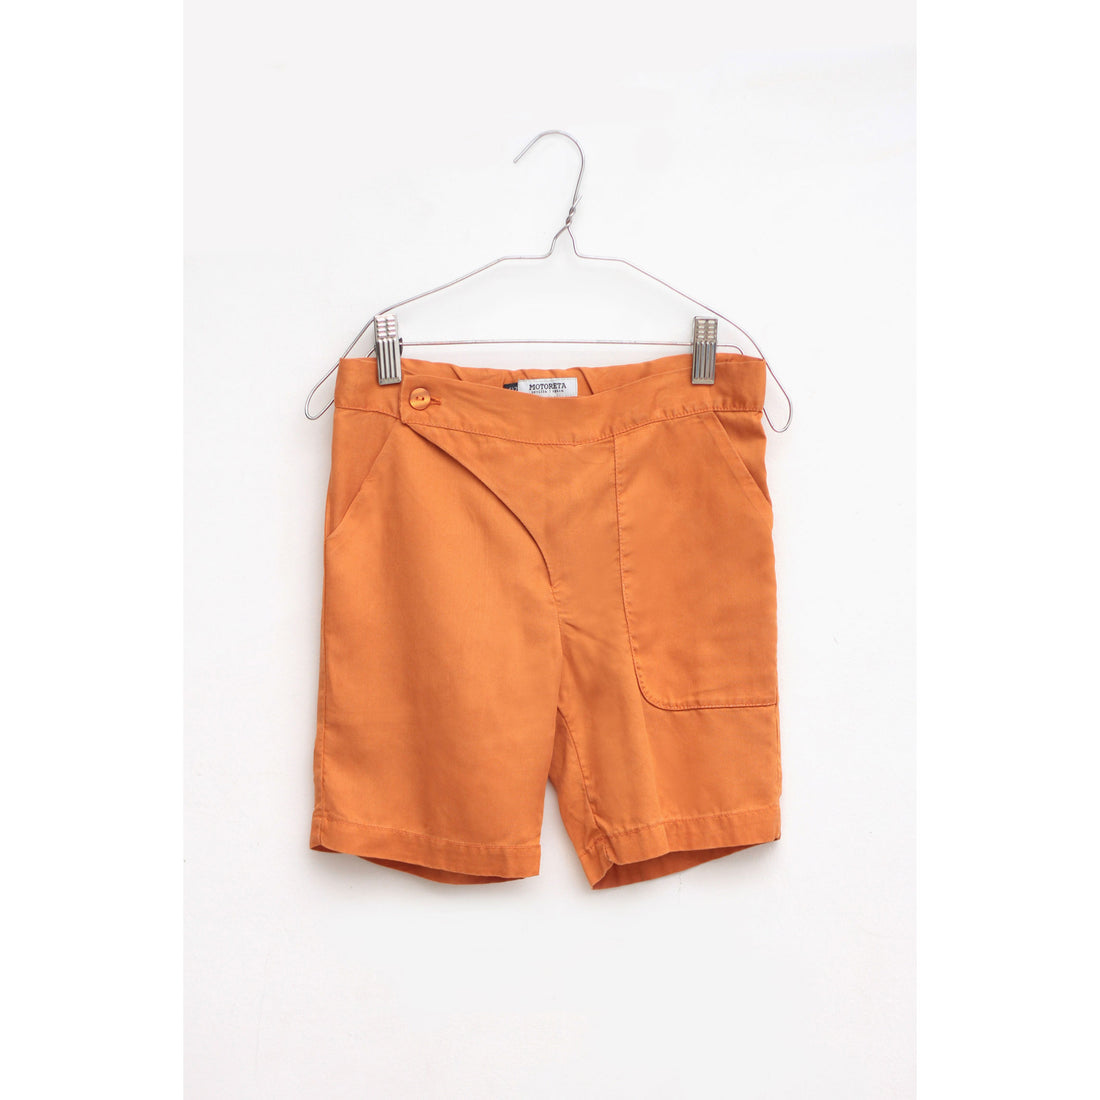 Motoreta Orange Baby Pocket Shorts